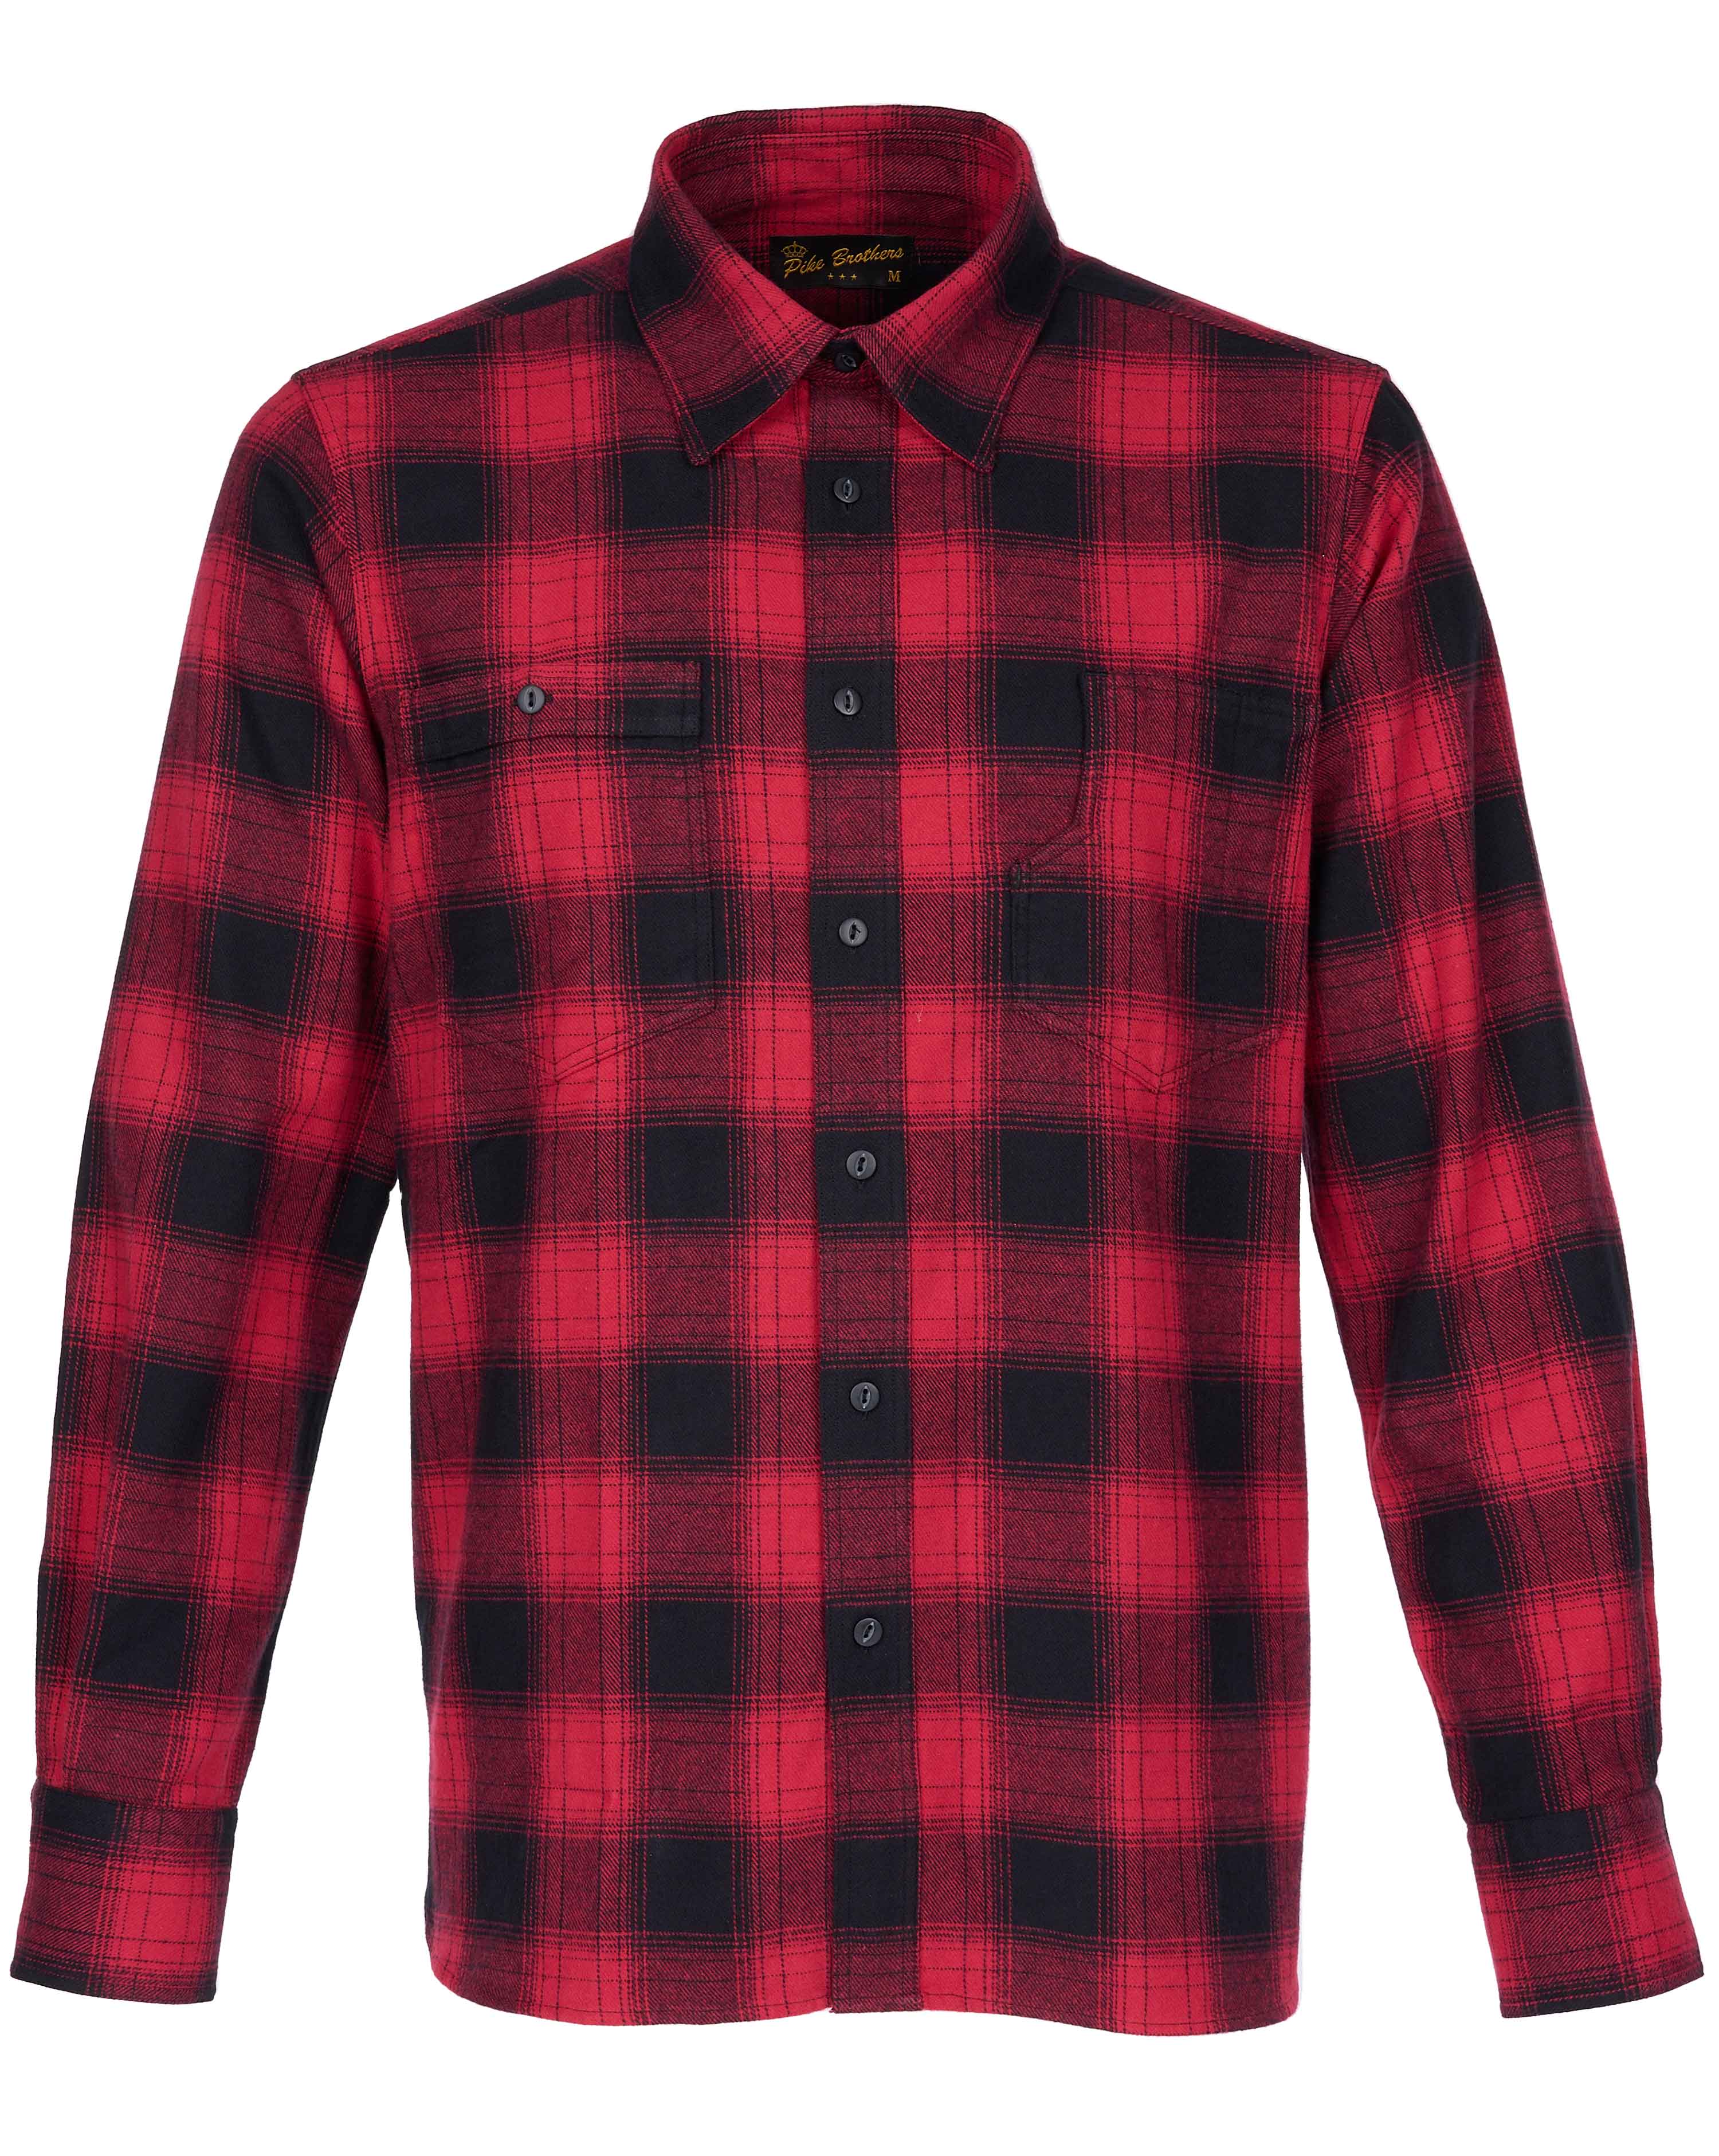 1937 Roamer Shirt red check flannel